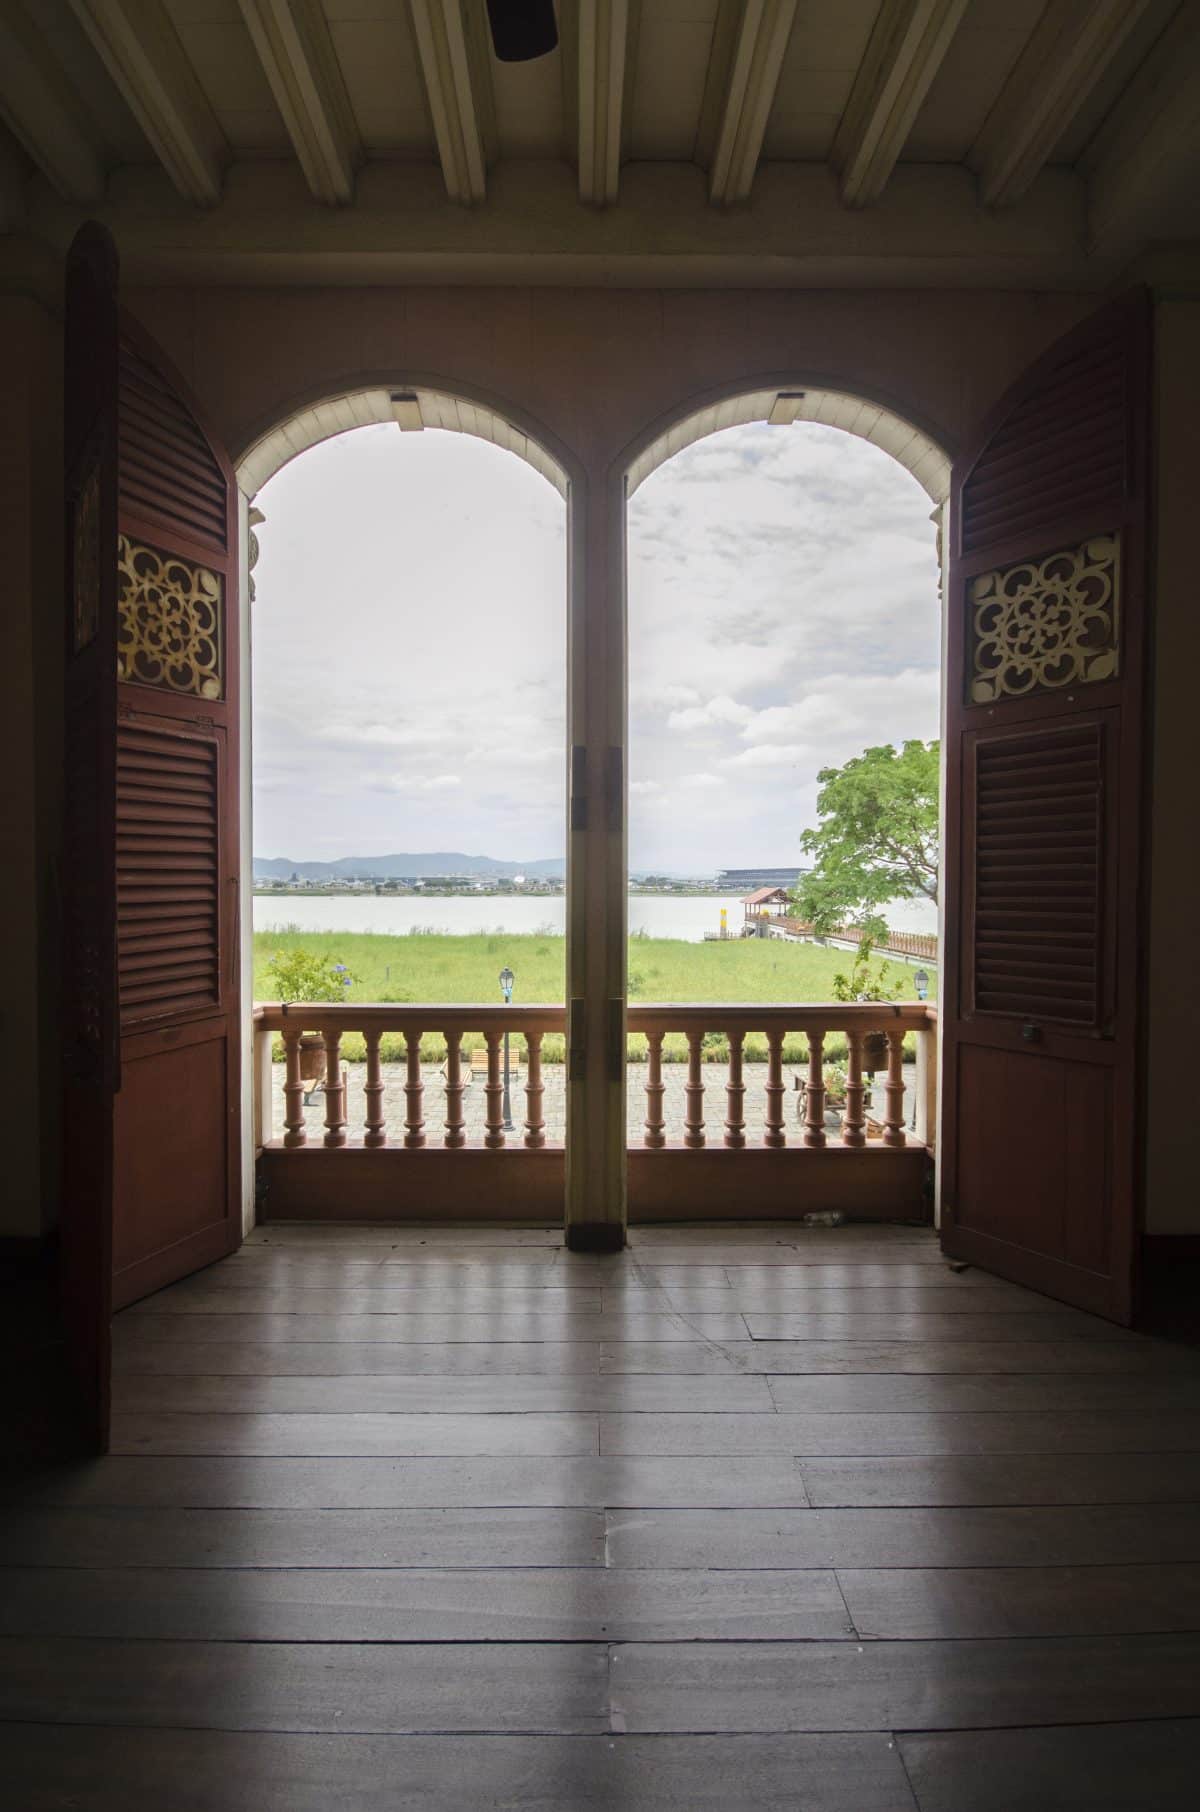 View from Historic Building, Parque Histórico, Guayaquil, Ecuador.